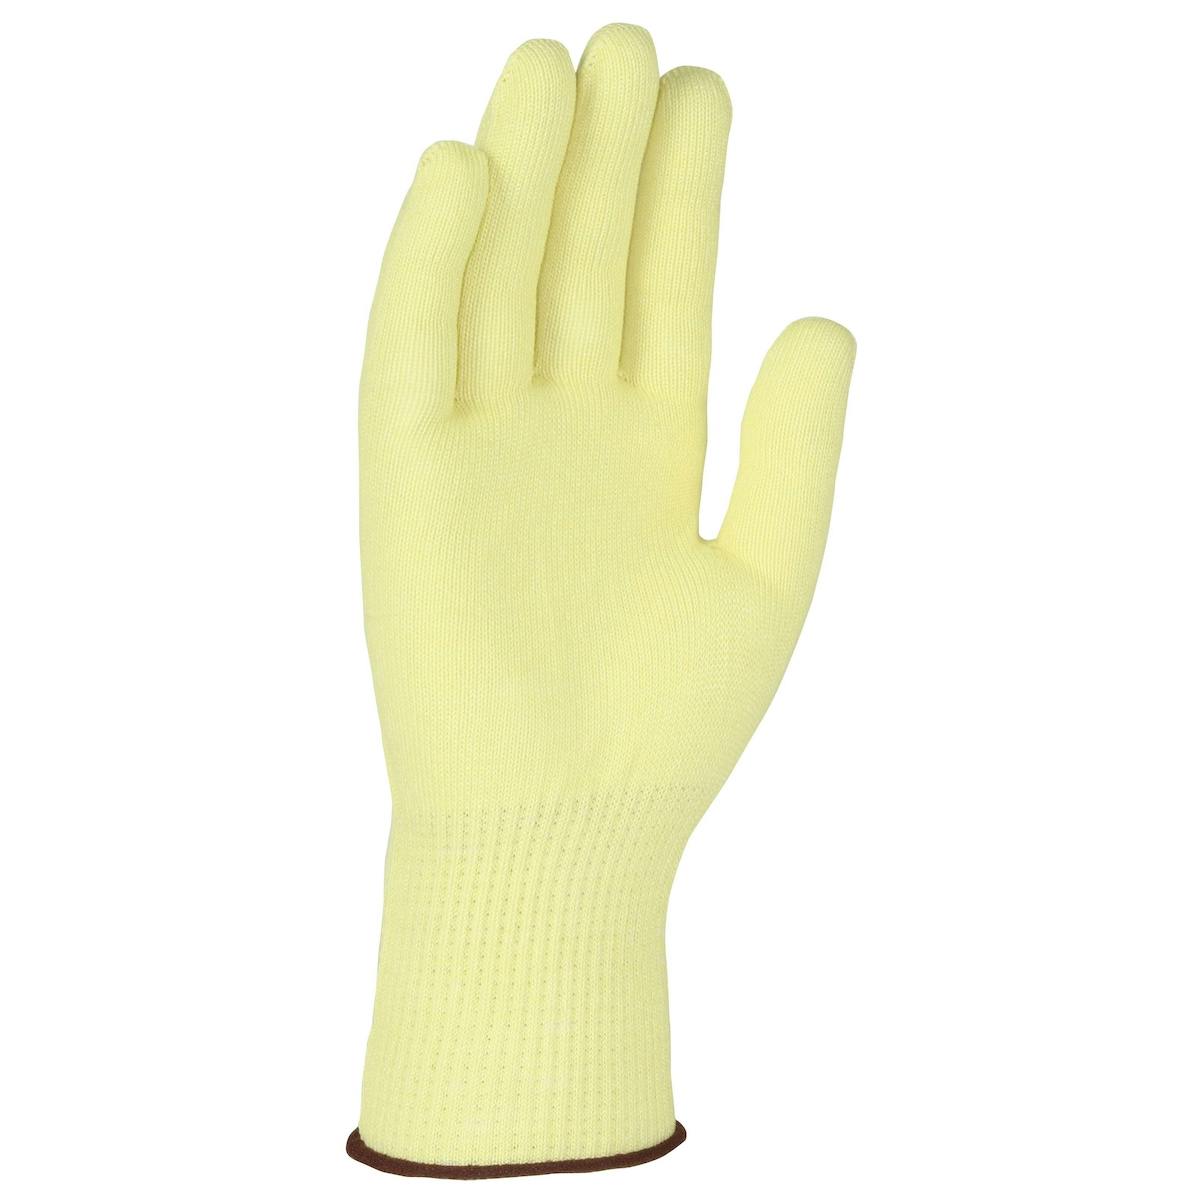 PIP® Seamless Knit ATA® / Elastane Blended Glove - Light Weight (M500)_0